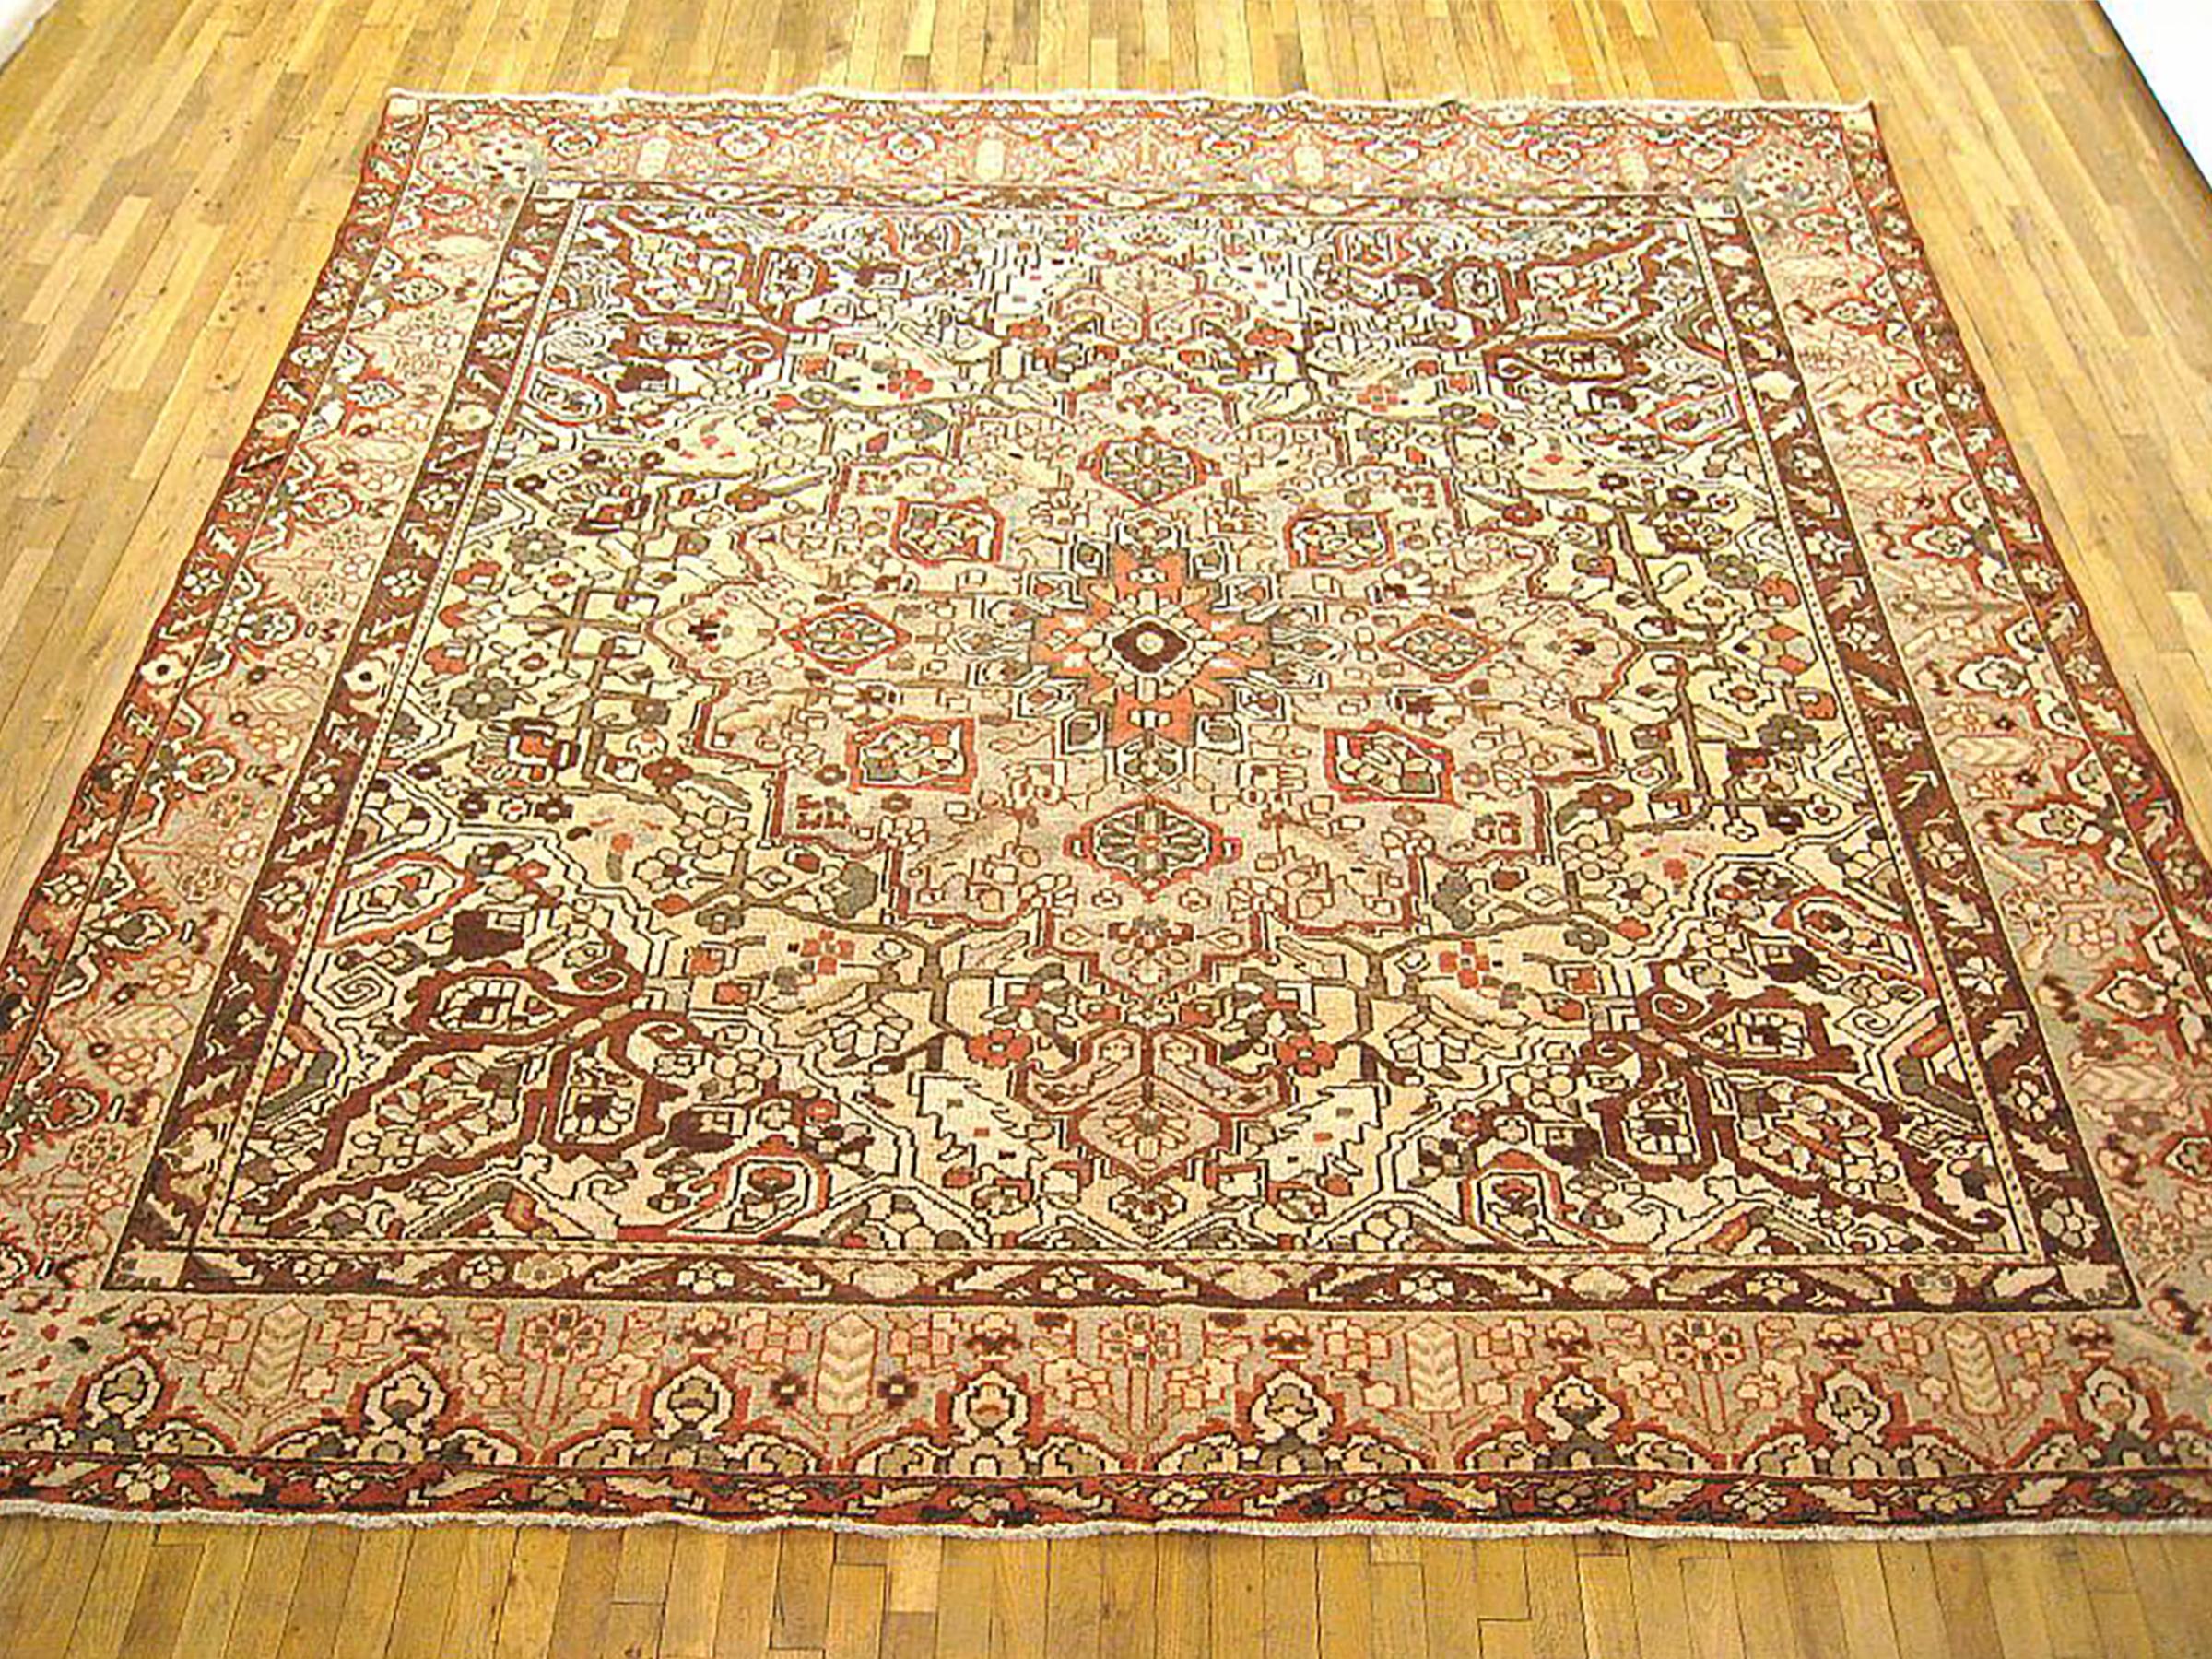 Vintage Persian Baktiari Oriental rug, Room size

A vintage Baktiari oriental rug, size 10'0